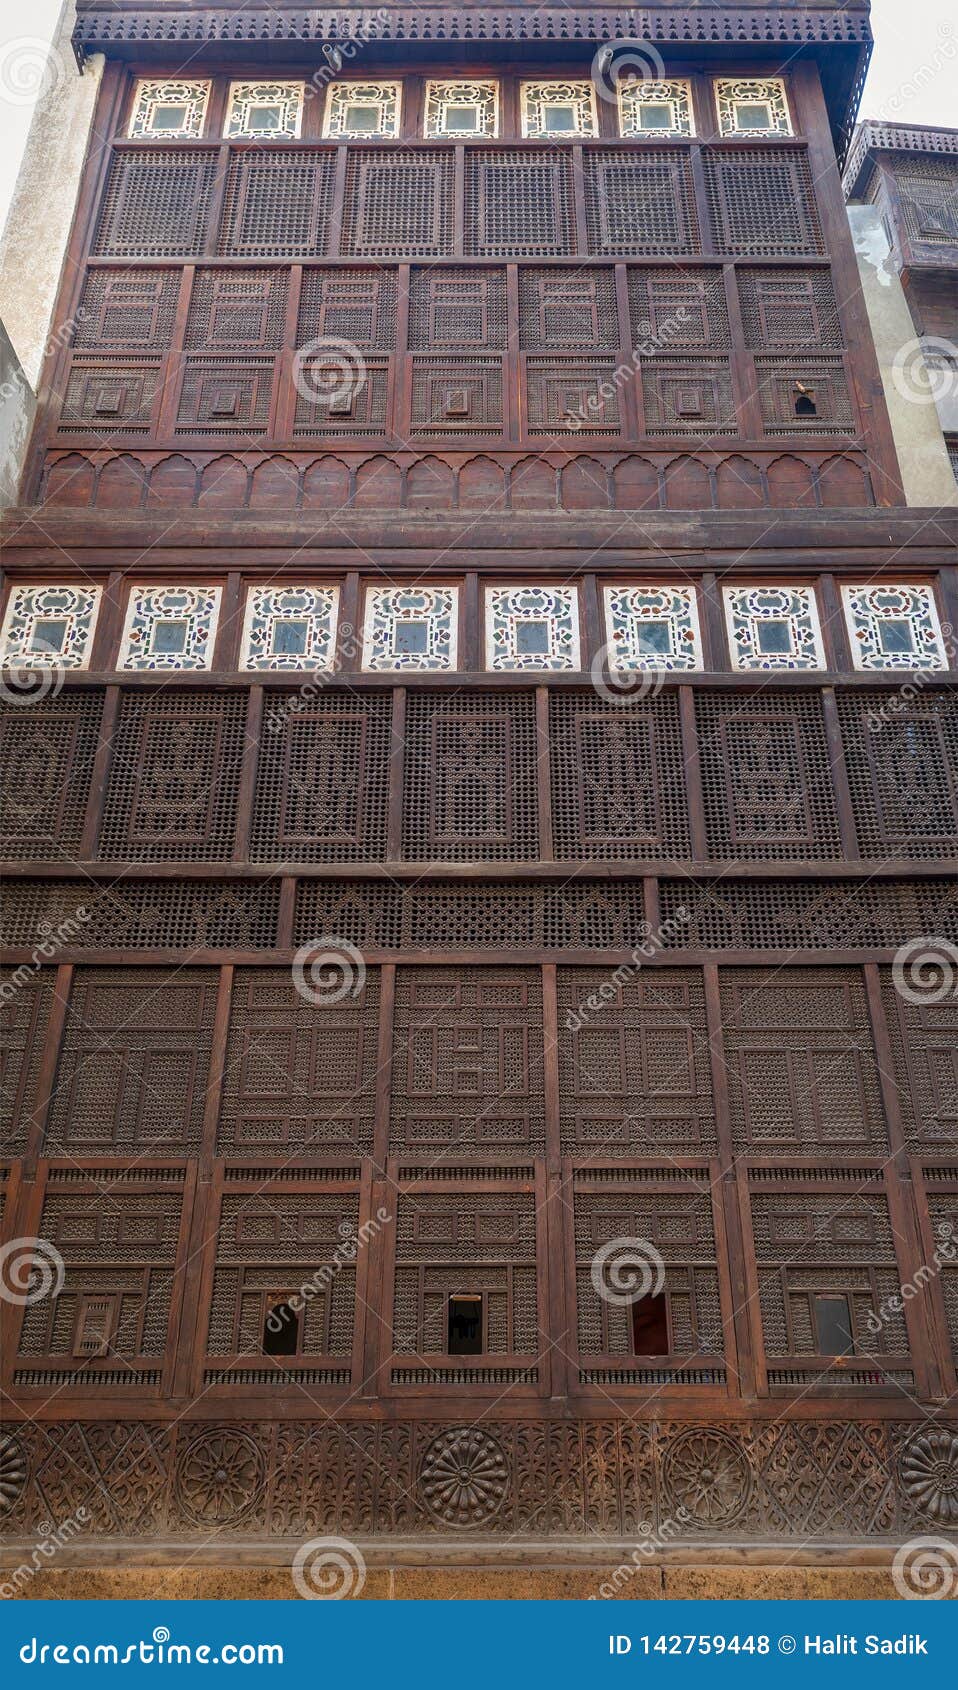 mashrabiya facade at el sehemy house, an old ottoman era house in medieval cairo, egypt